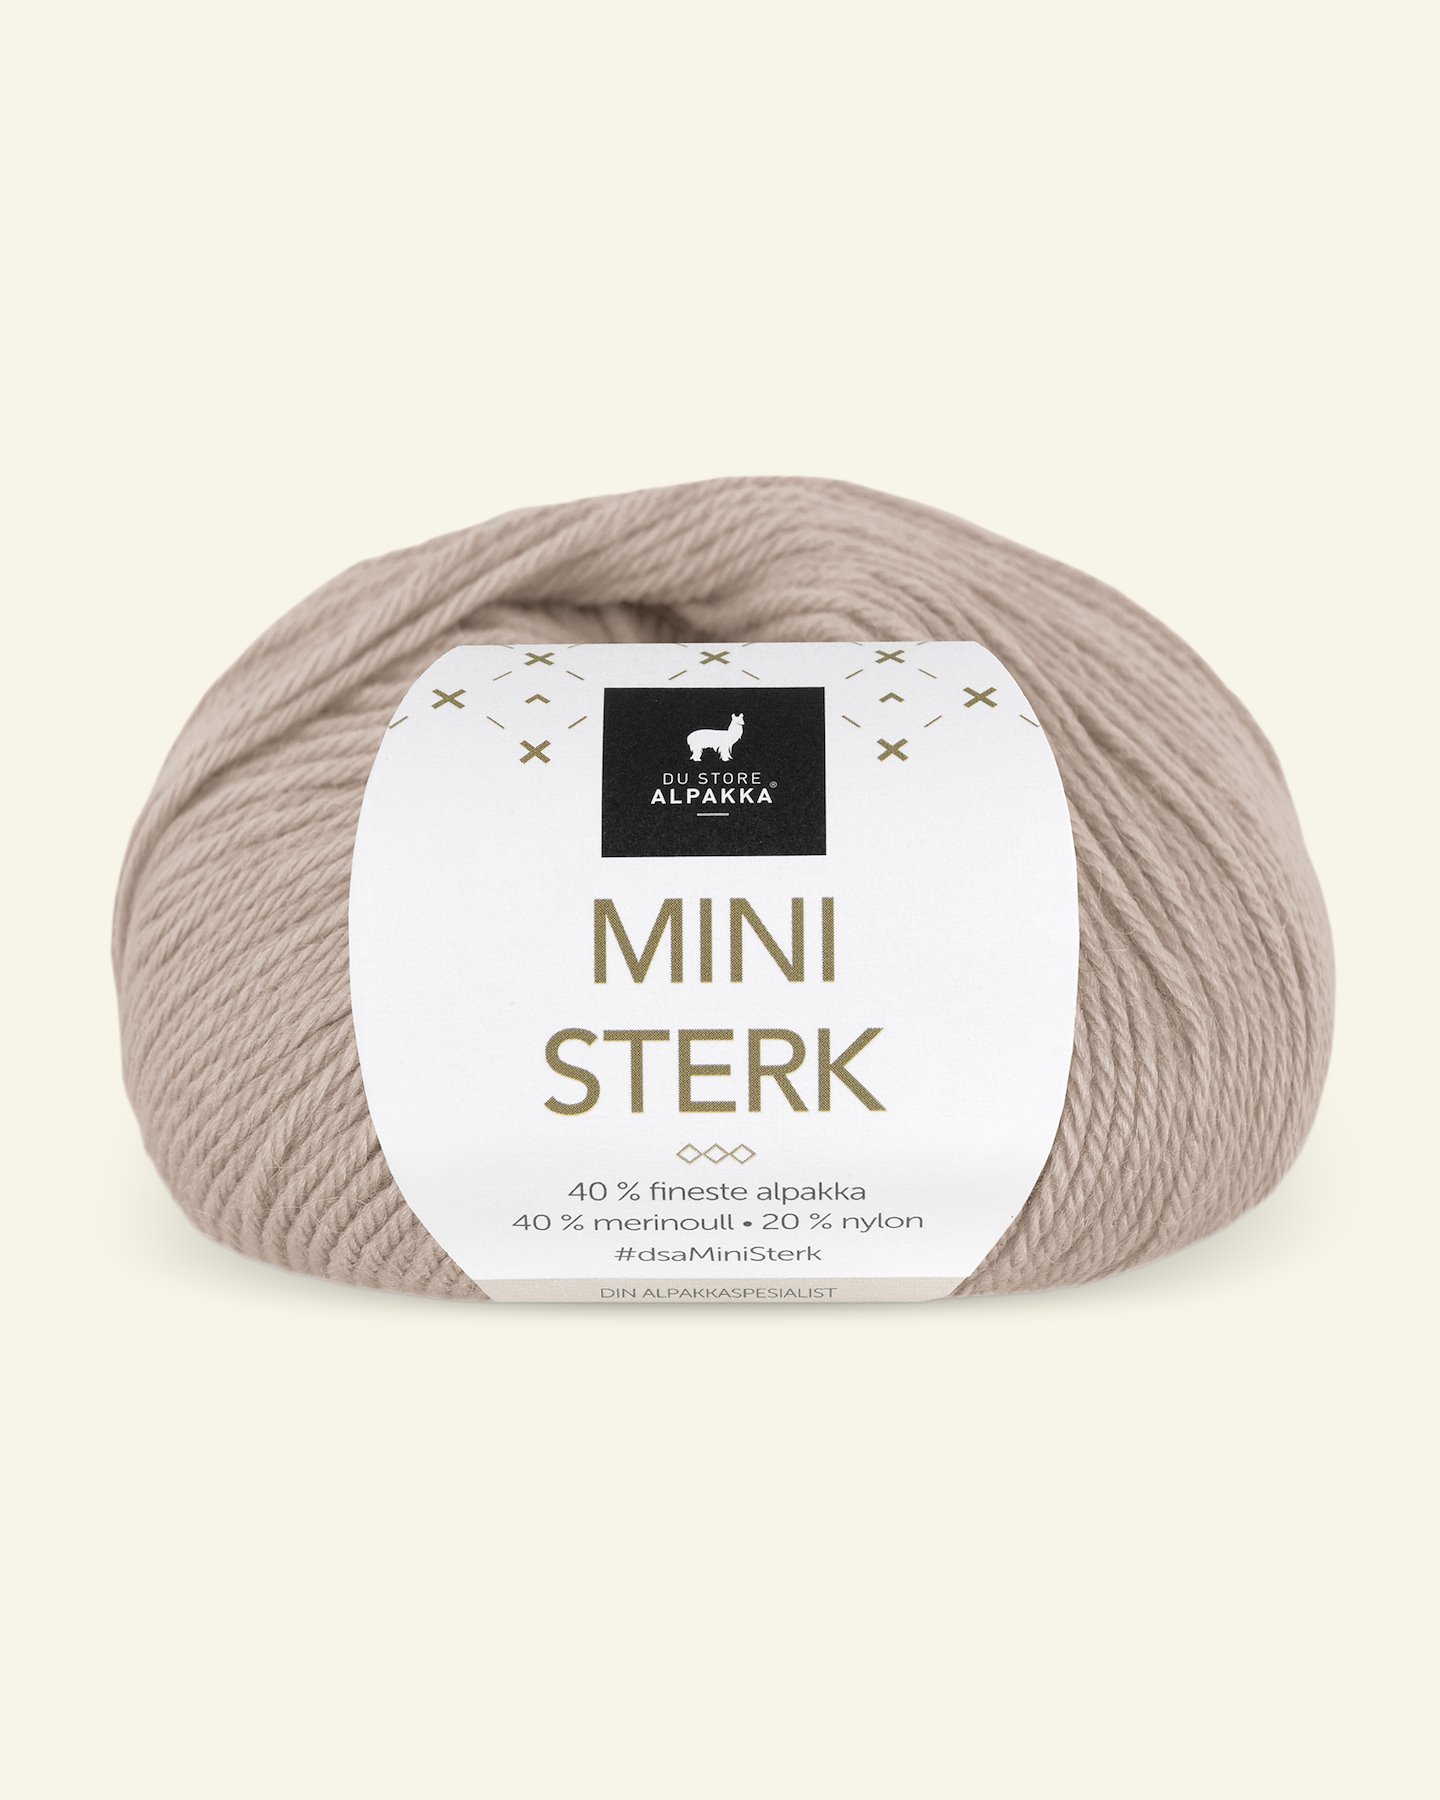 Du Store Alpakka,alpaca merino mixed yarn "Mini Sterk", powder (903) 90000646_pack